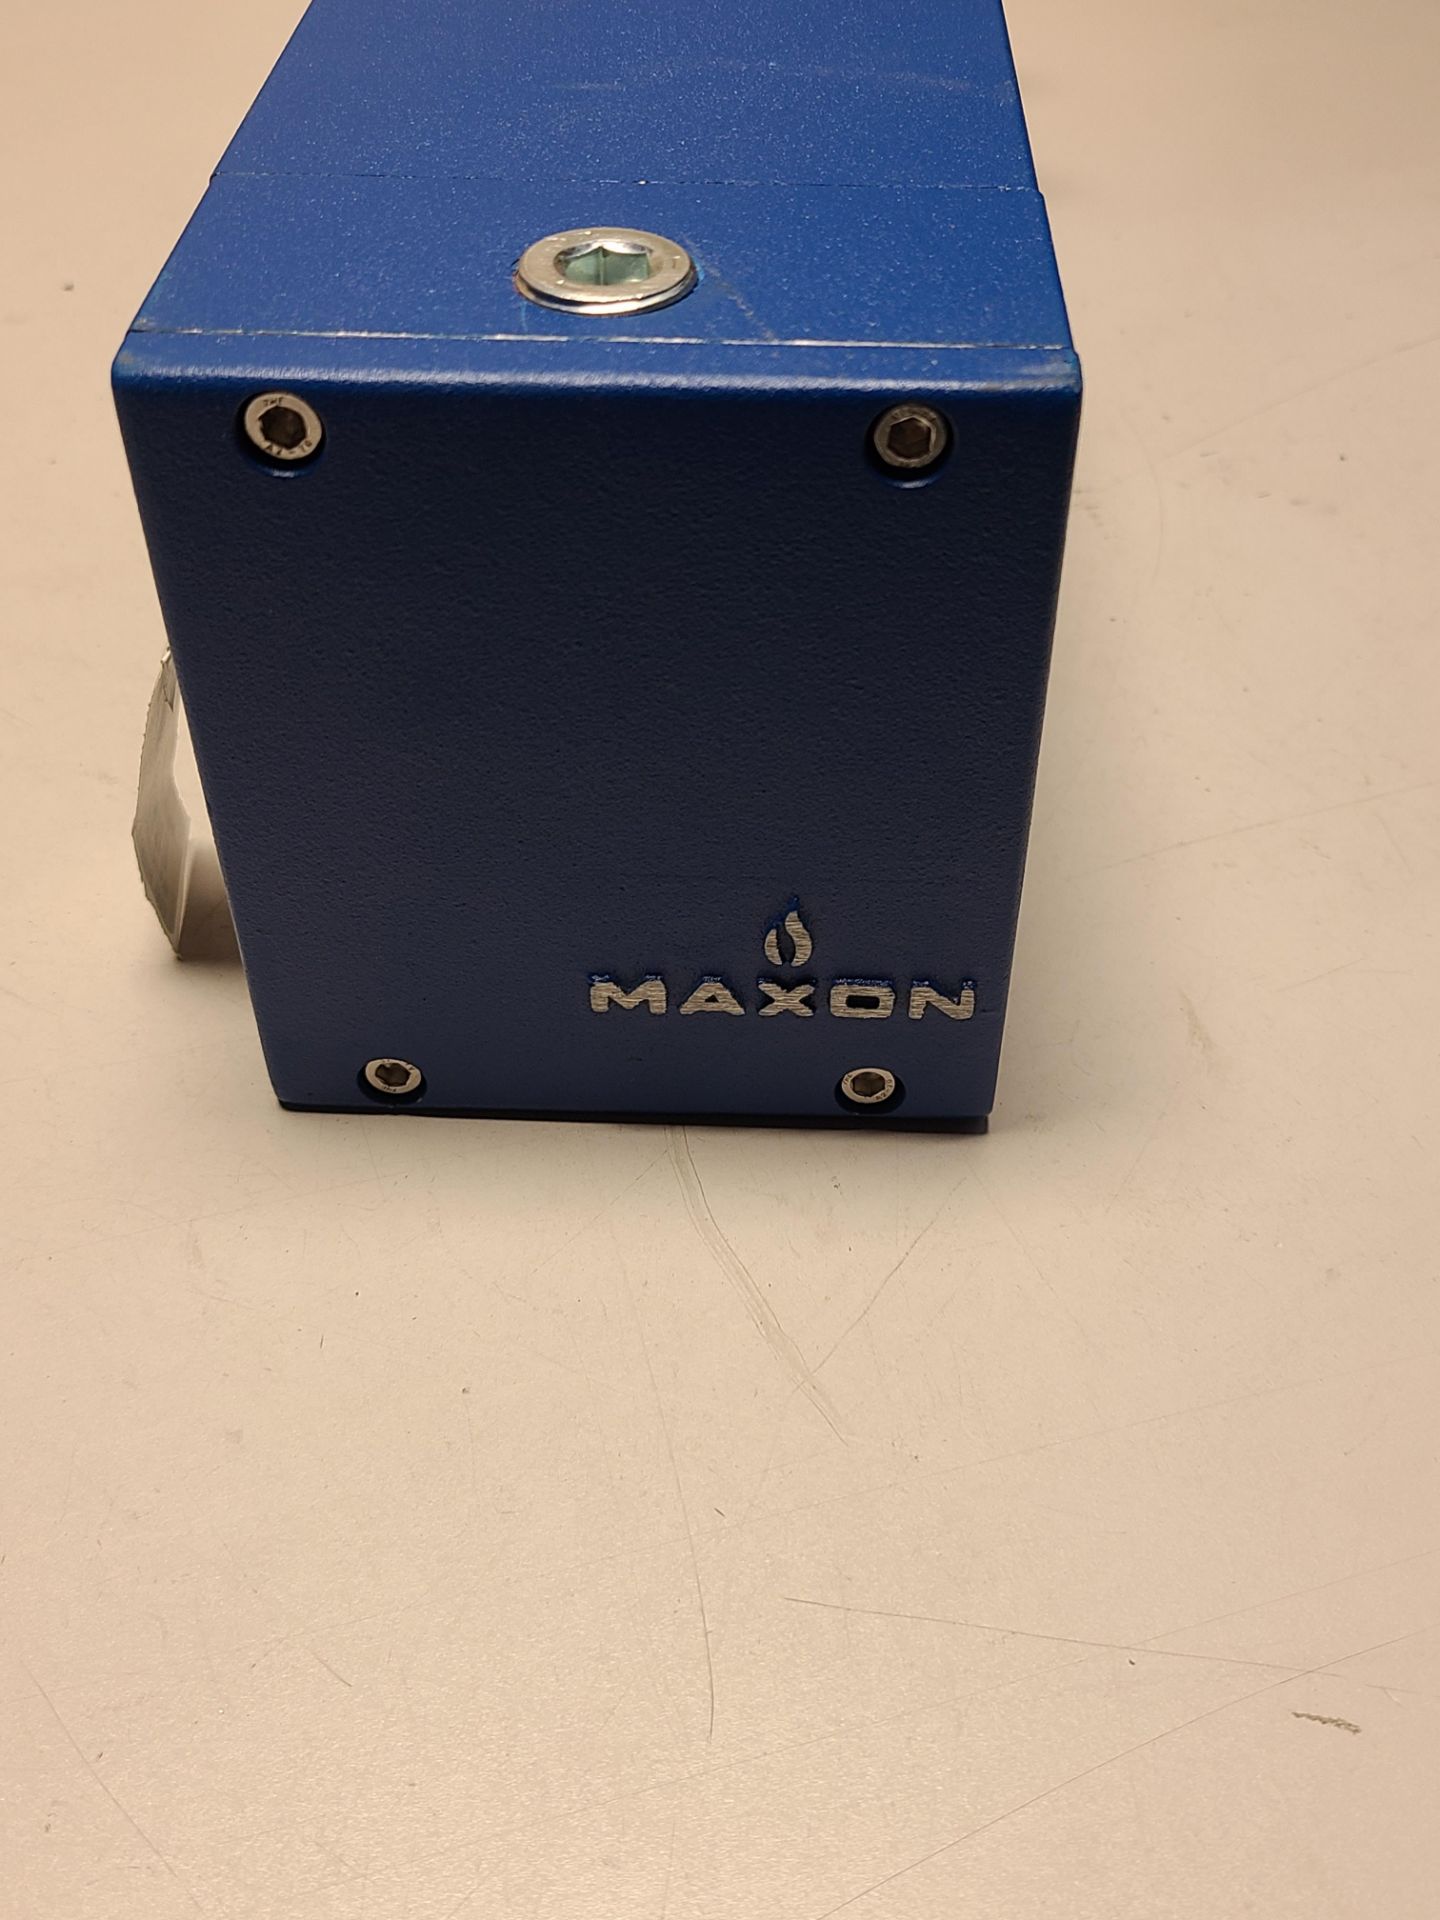 NEW MAXON SMARTFIRE FUEL VALVE ACTUATOR - Image 5 of 7